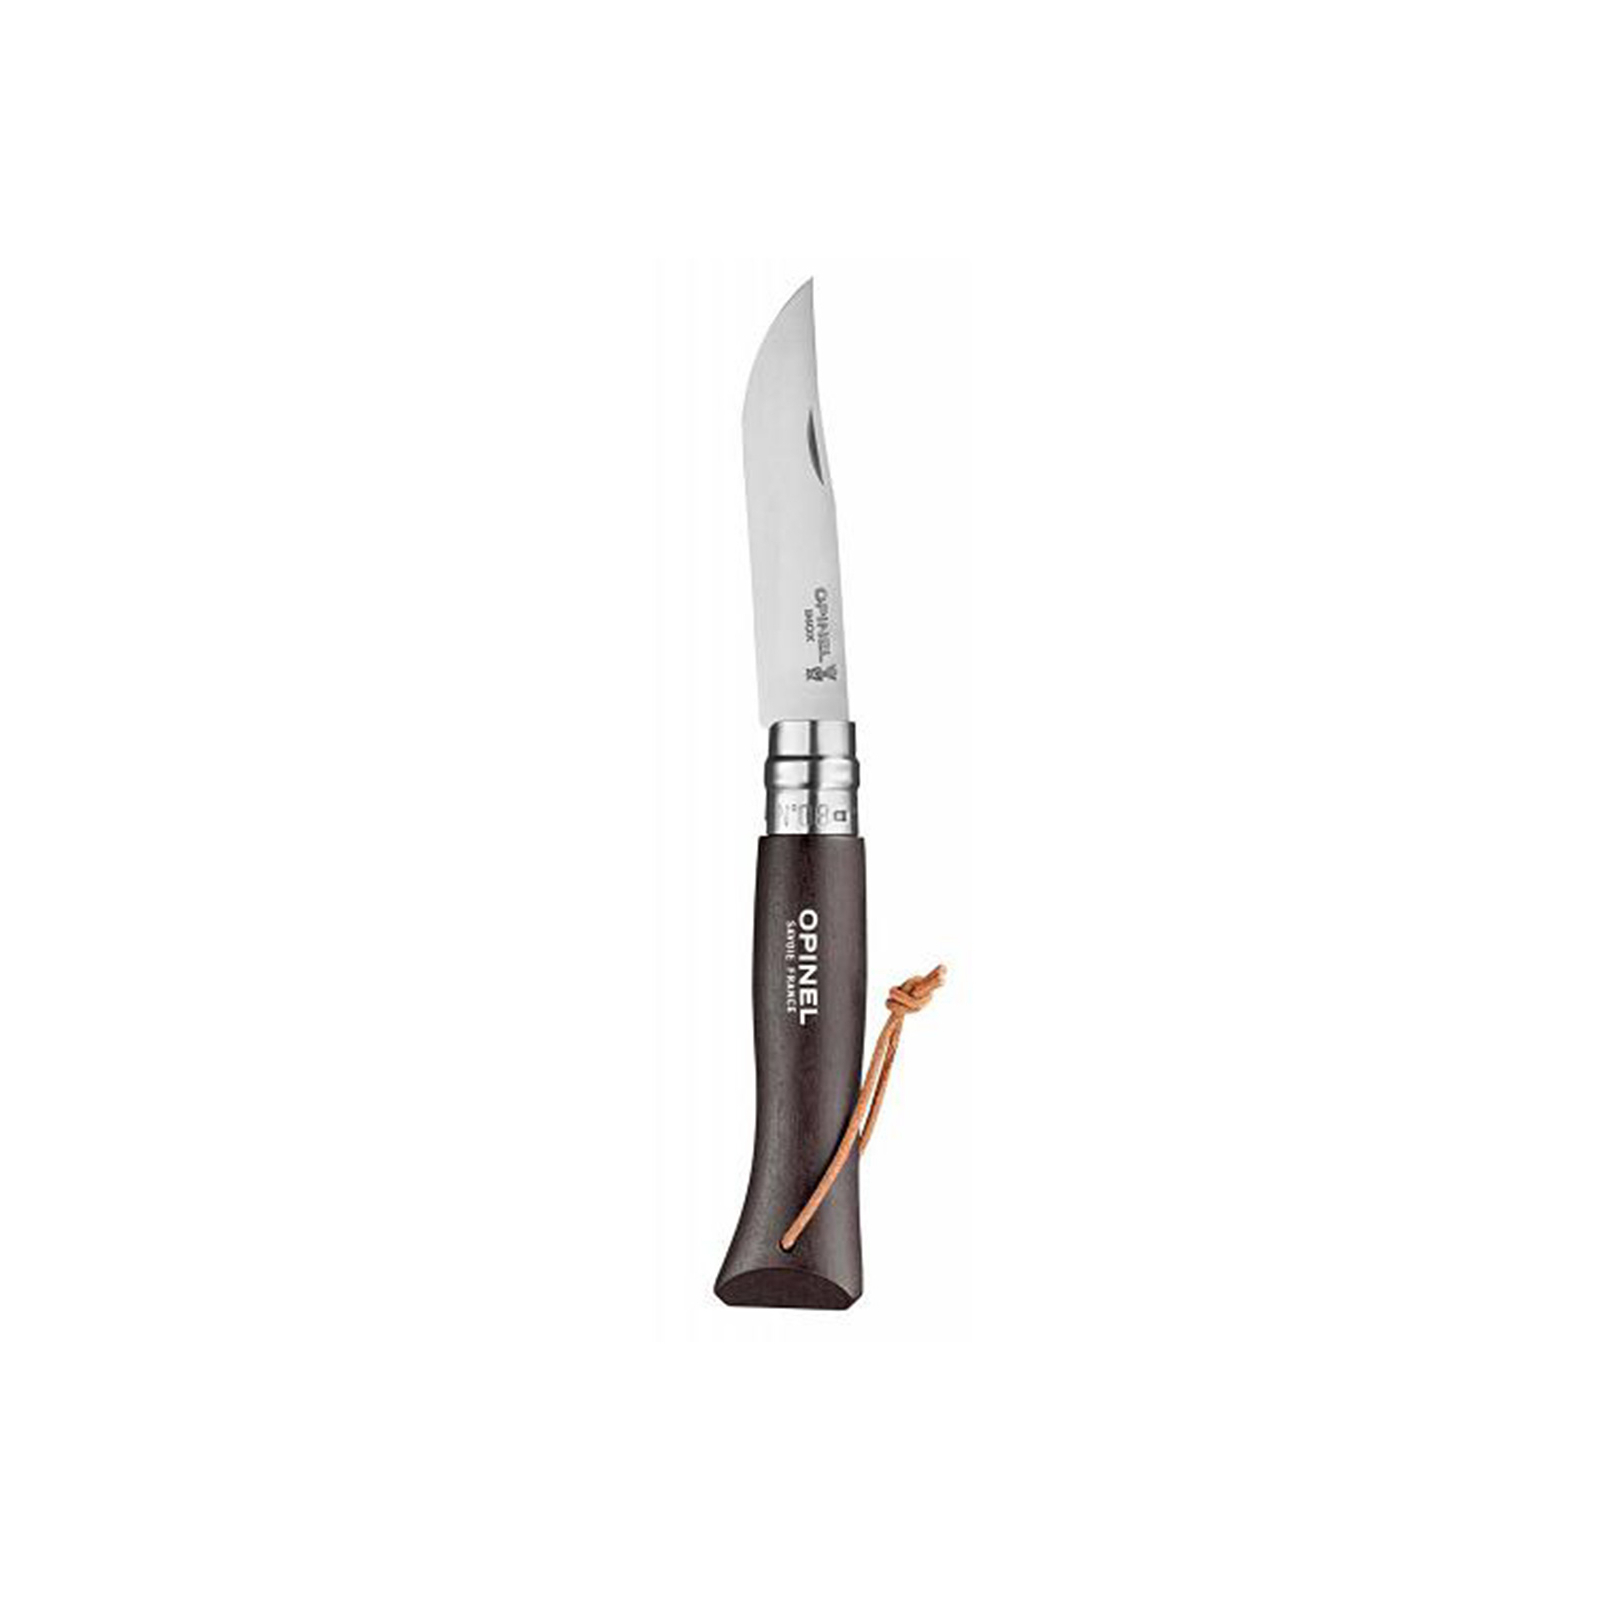 Нож Opinel №8 Inox VRI Trekking темно-синий, без упаковки (002212) изображение 3